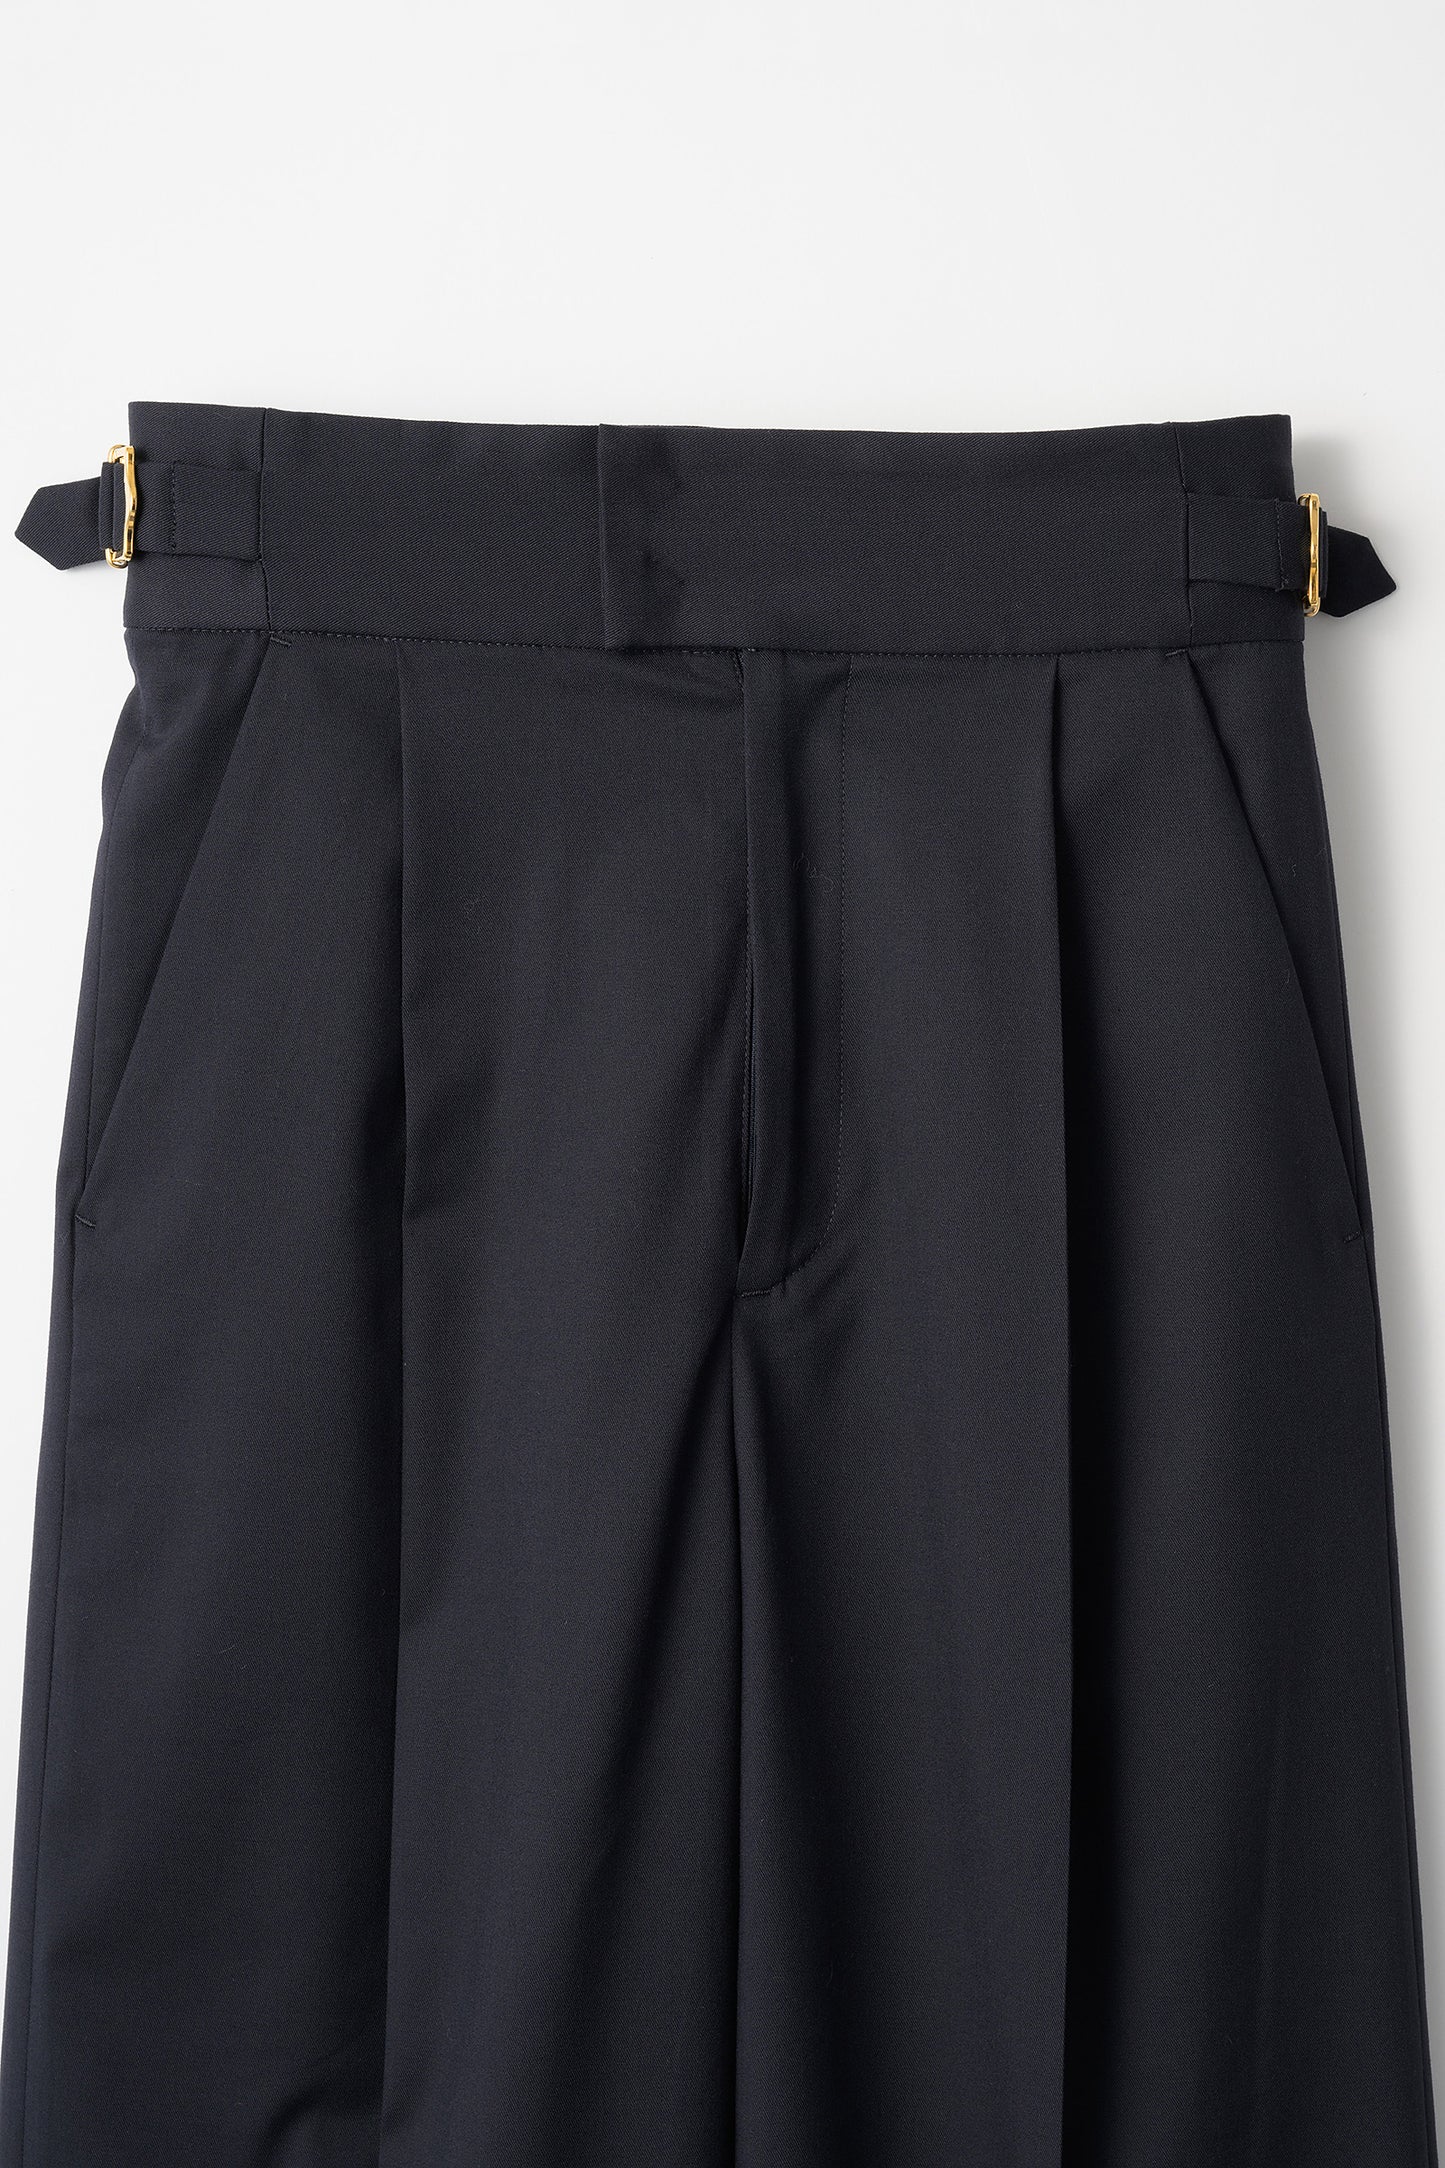 Belted wide pants (Dark navy)